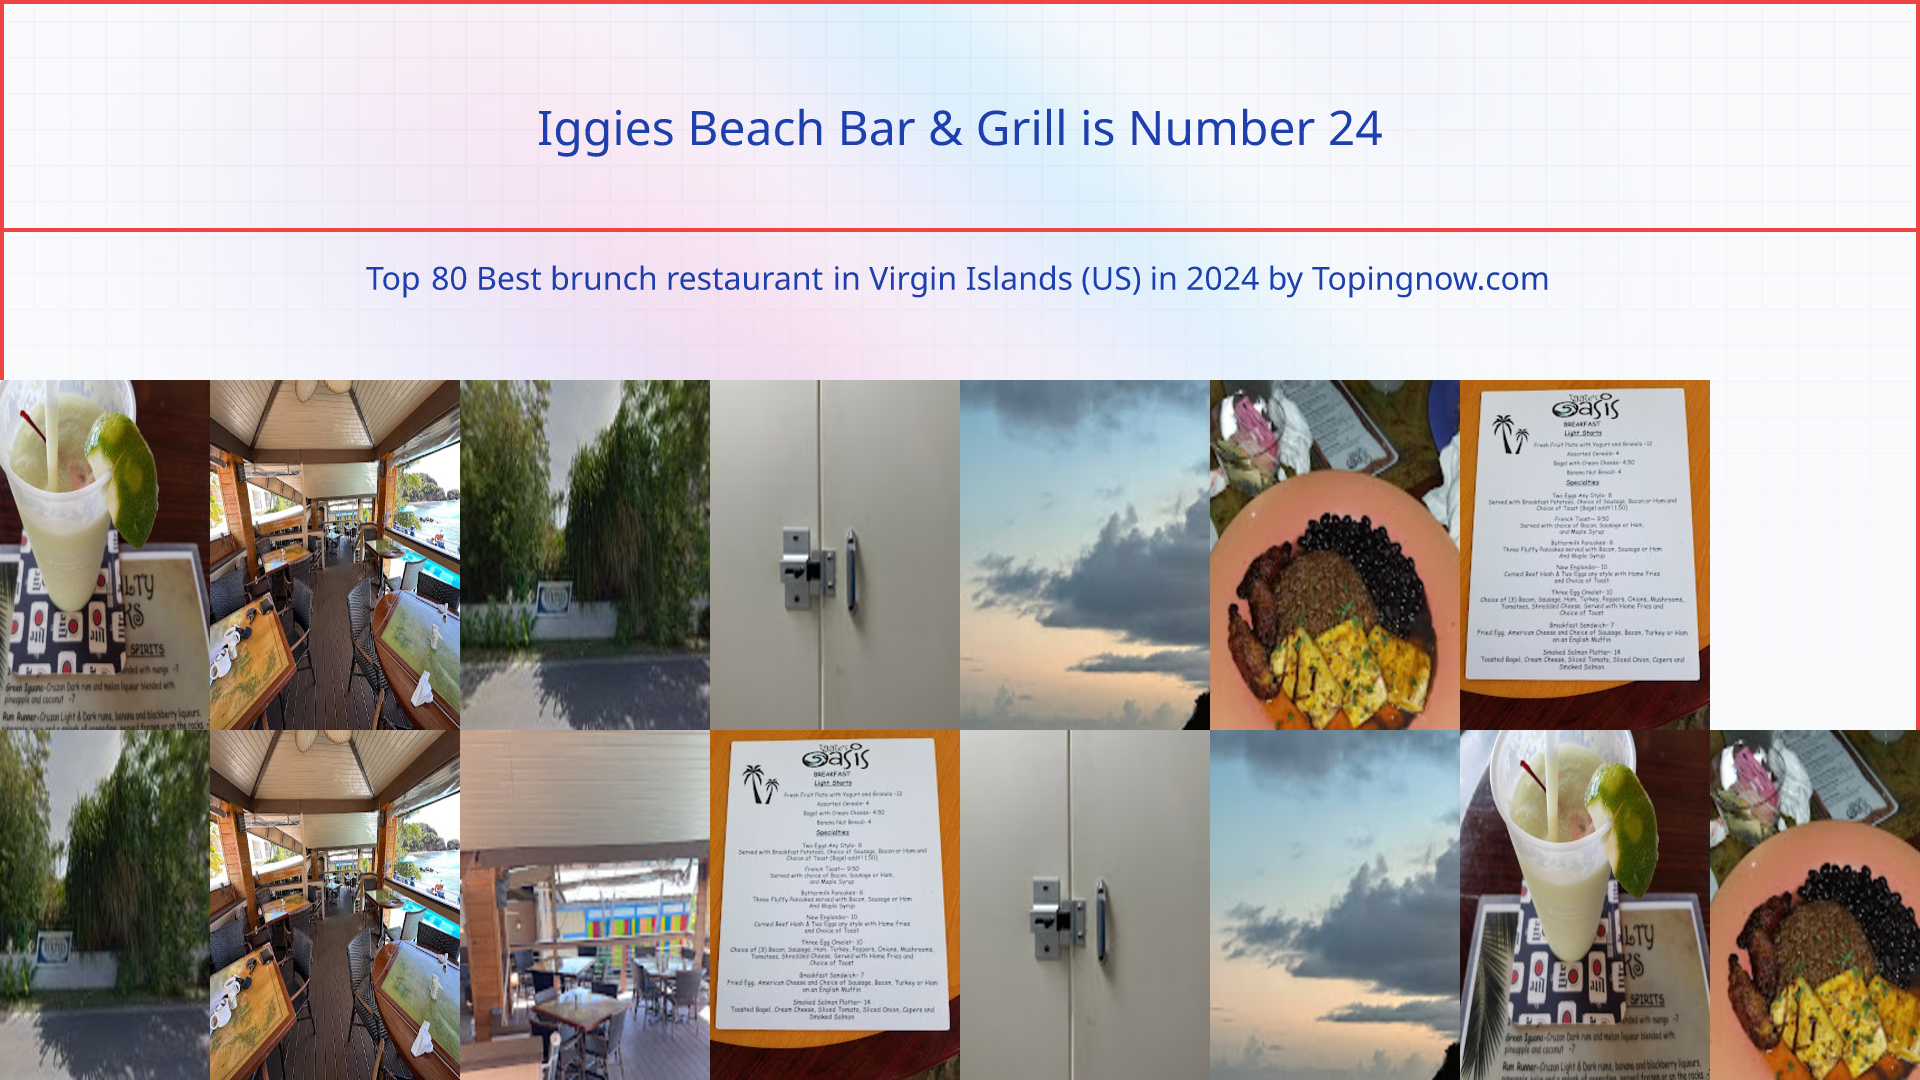 Iggies Beach Bar & Grill: Top 80 Best brunch restaurant in Virgin Islands (US) in 2024